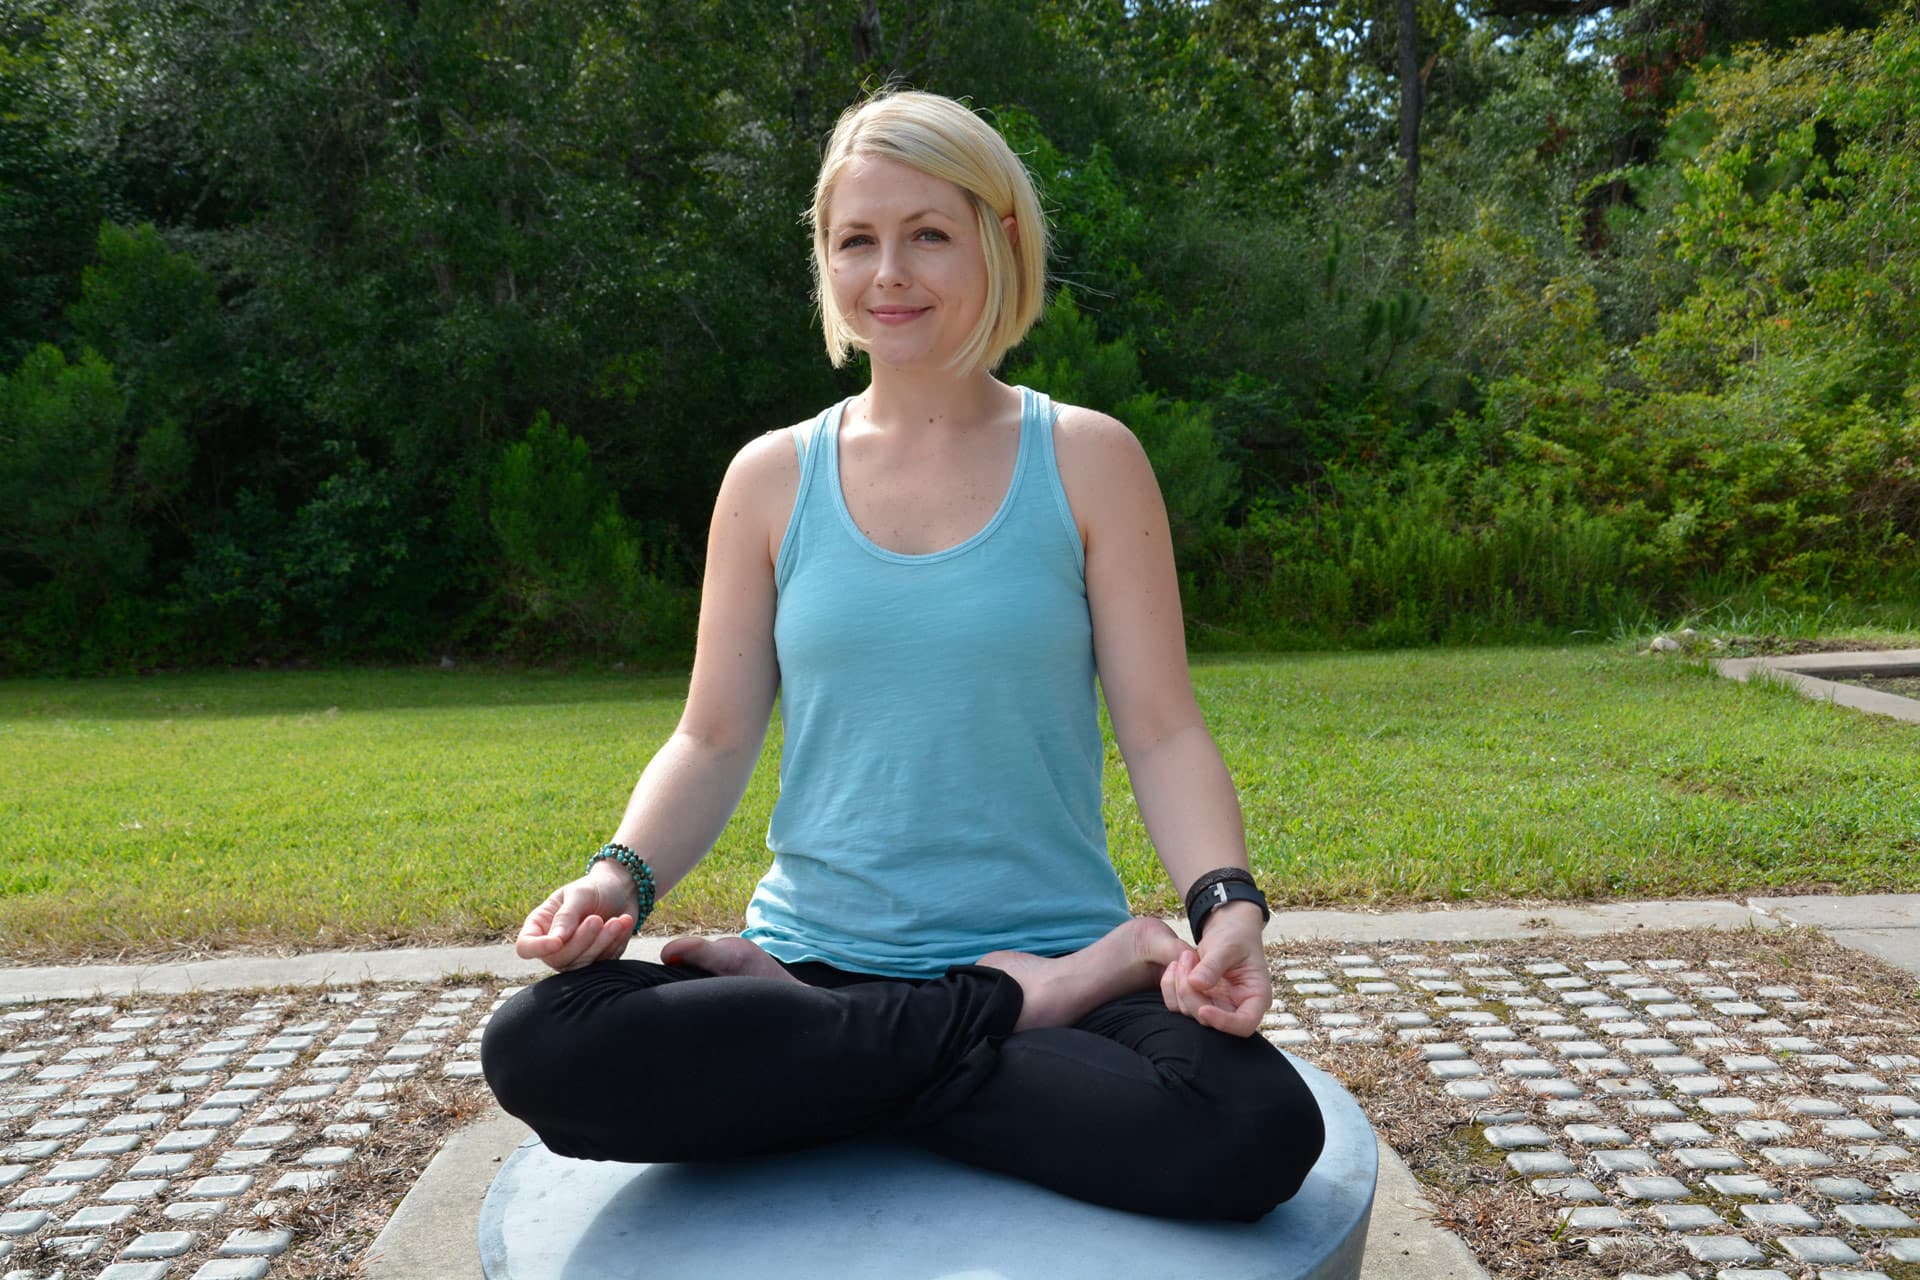 UHCL’s Friday Morning yoga program: benefits beyond the mat